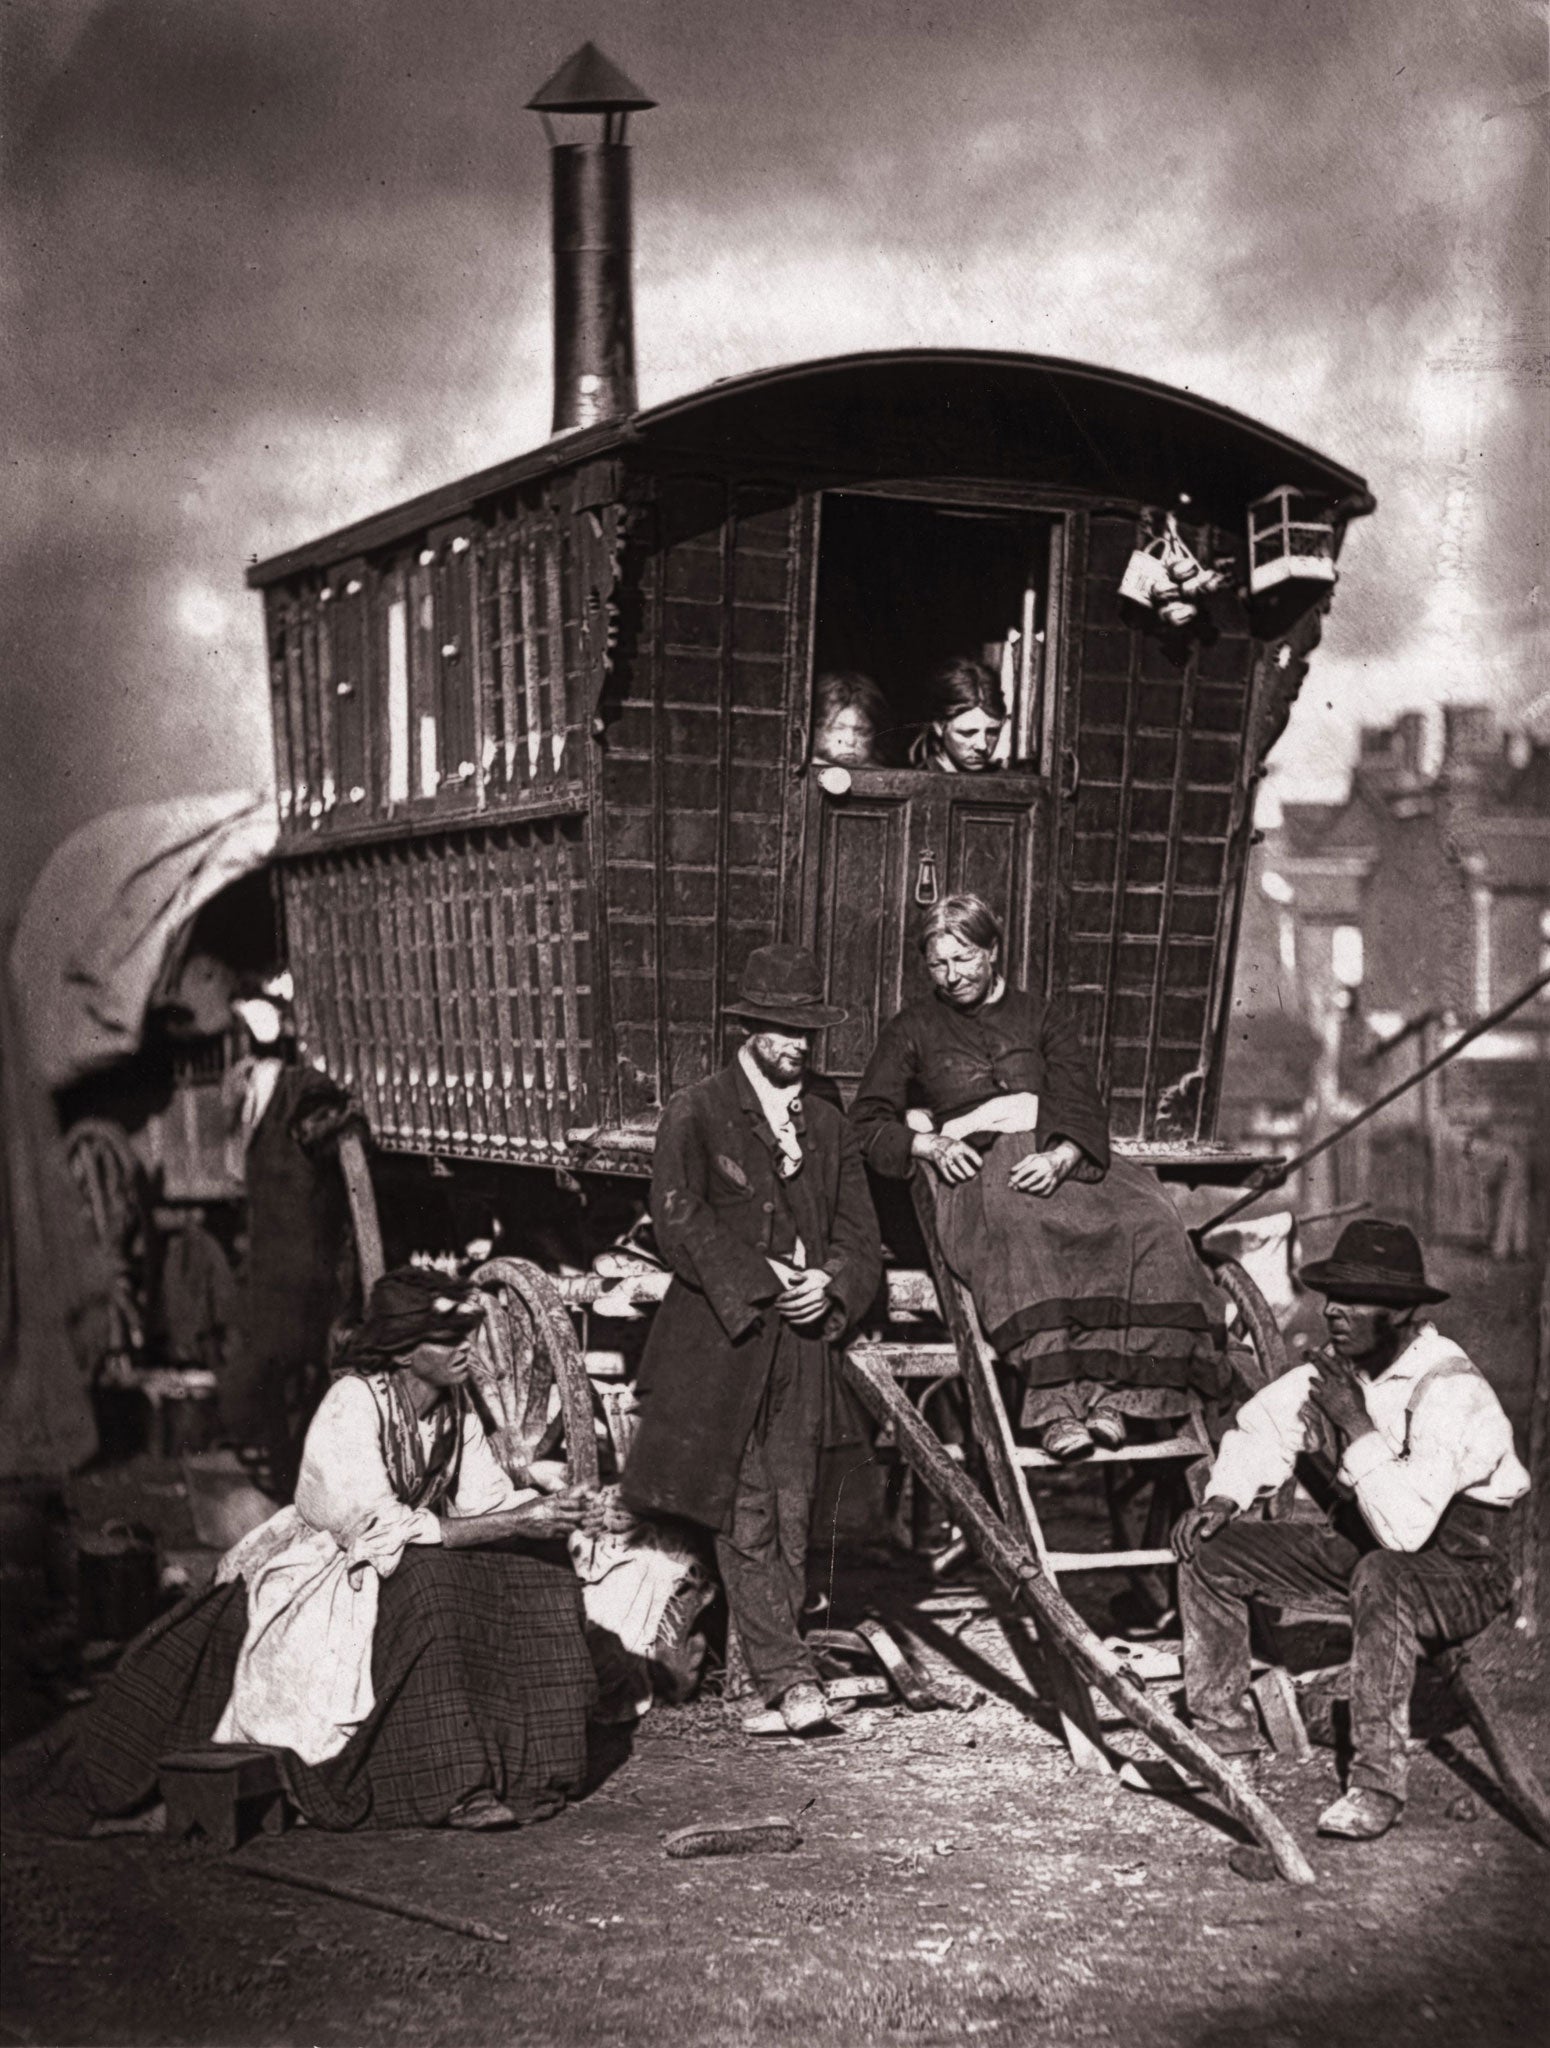 Citizens of the world: Gypsy caravan at an encampment near Notting Hill, London